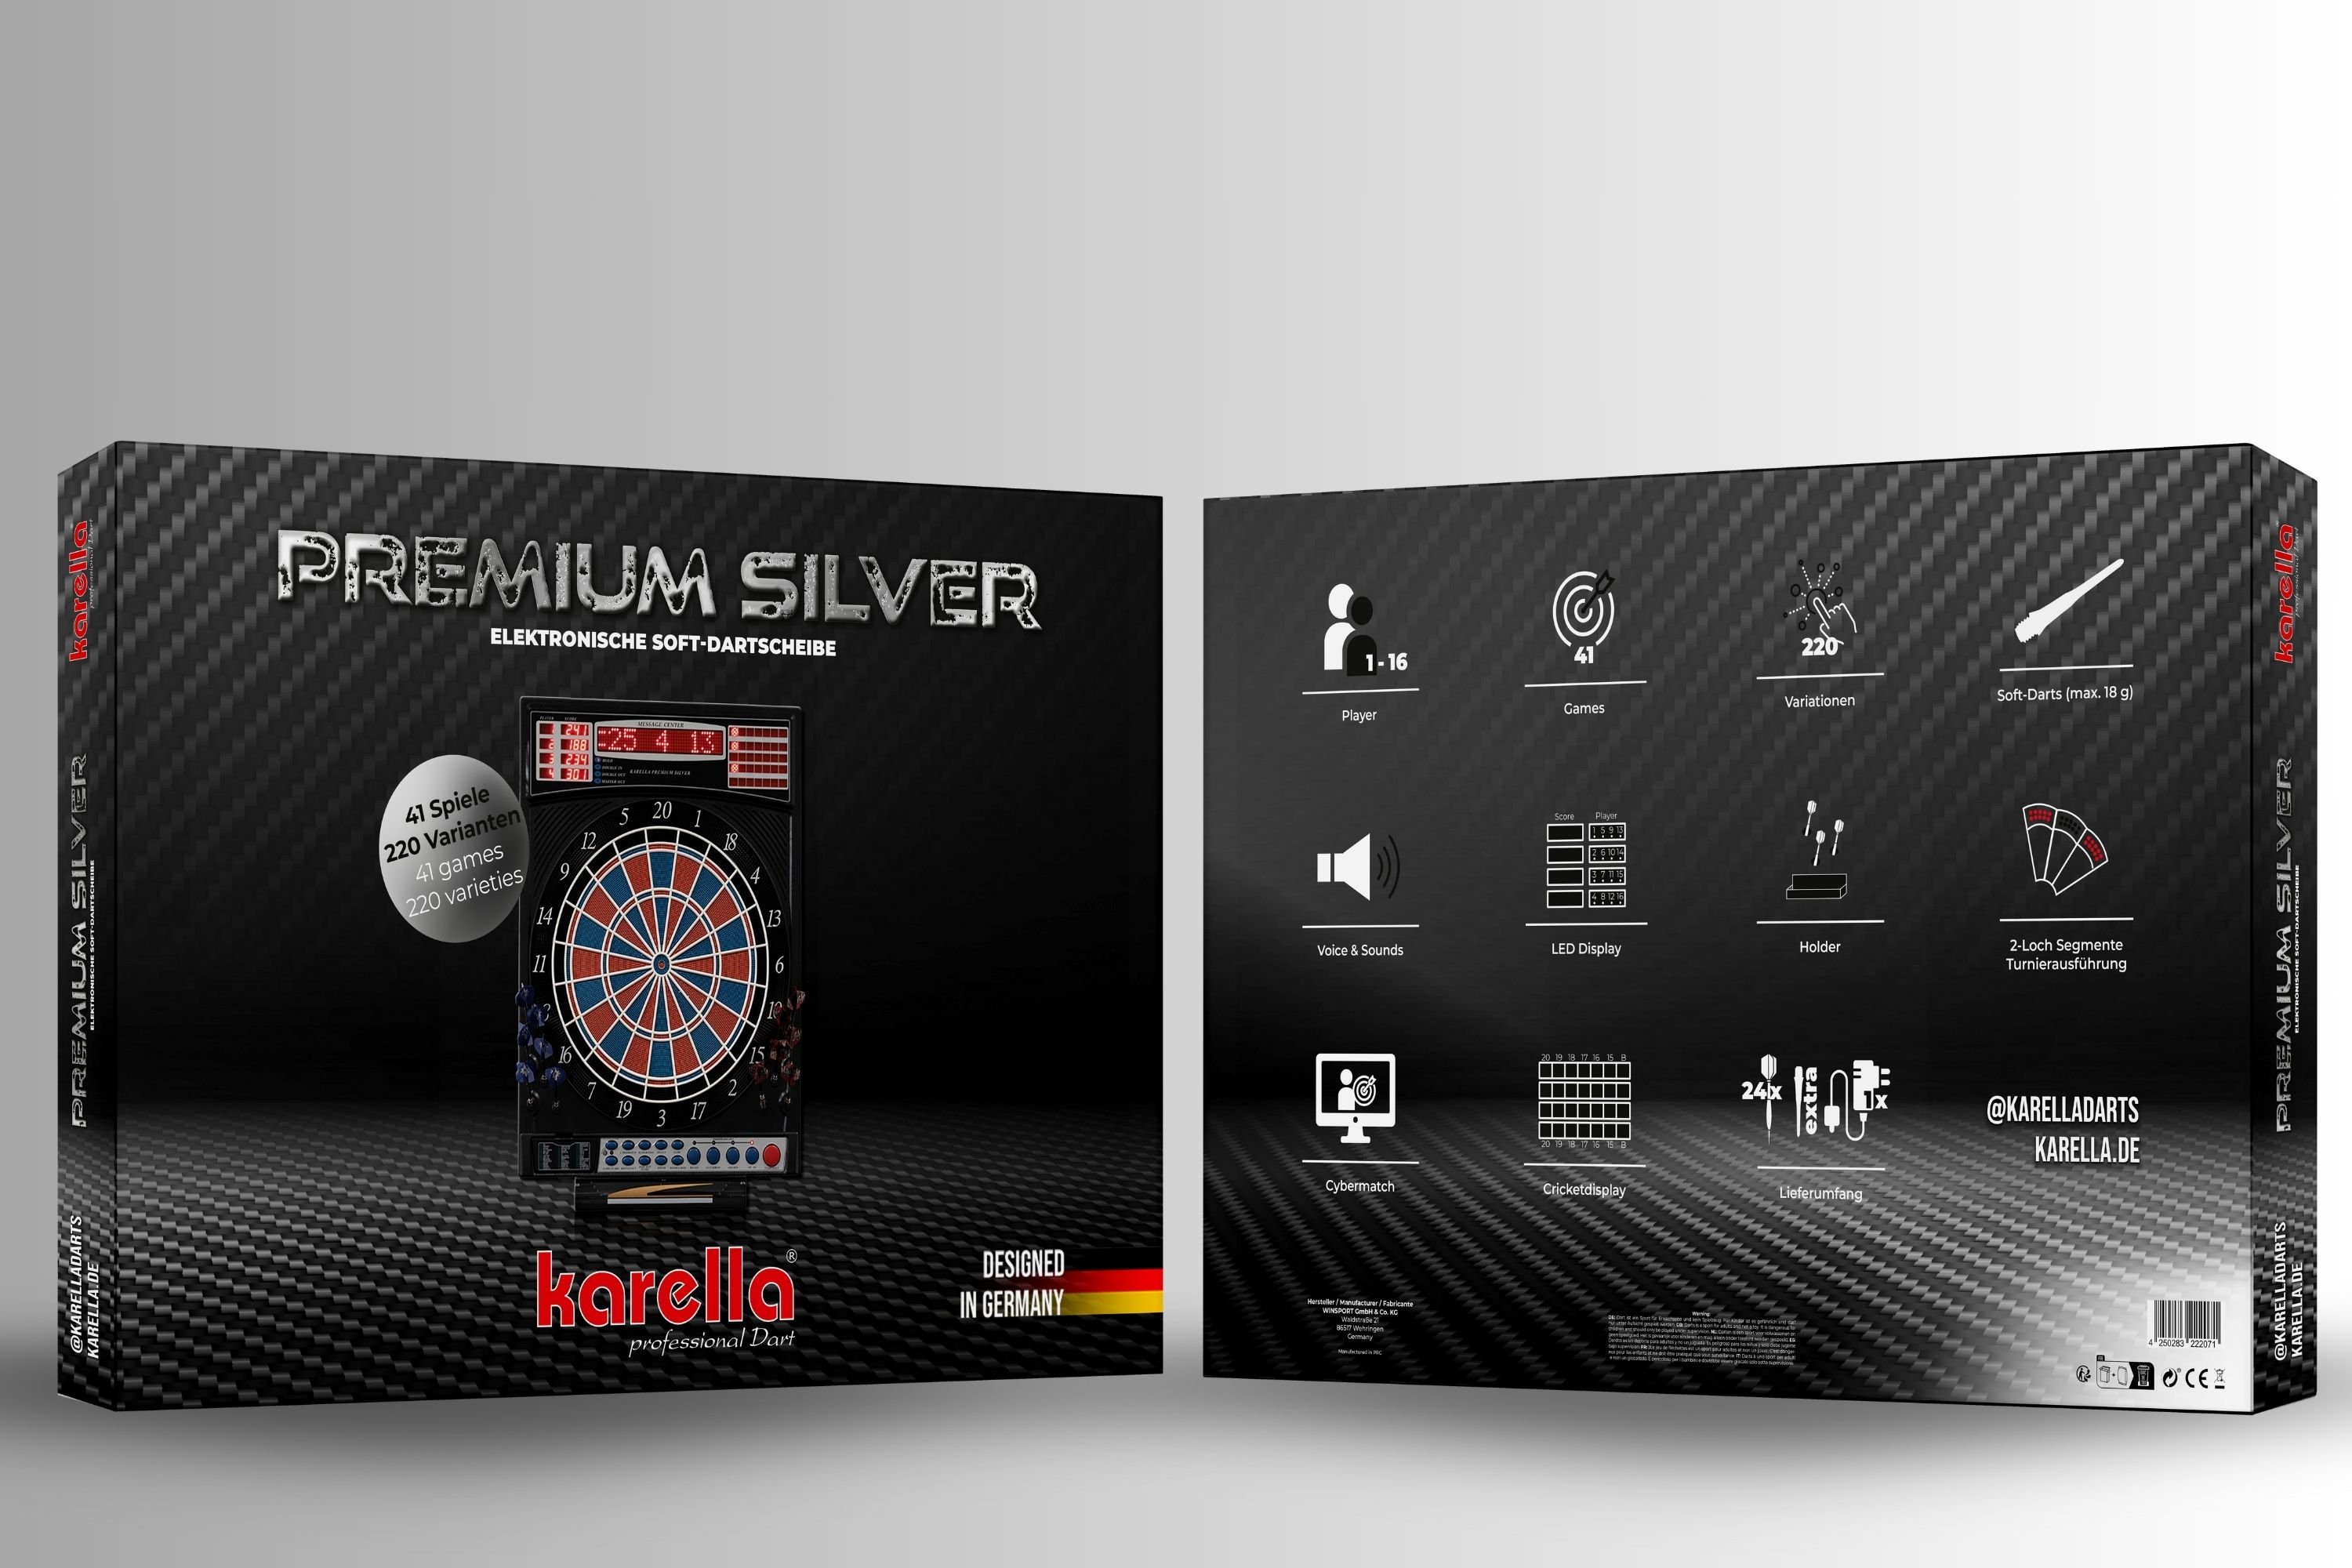 Karella premium silver dart machine